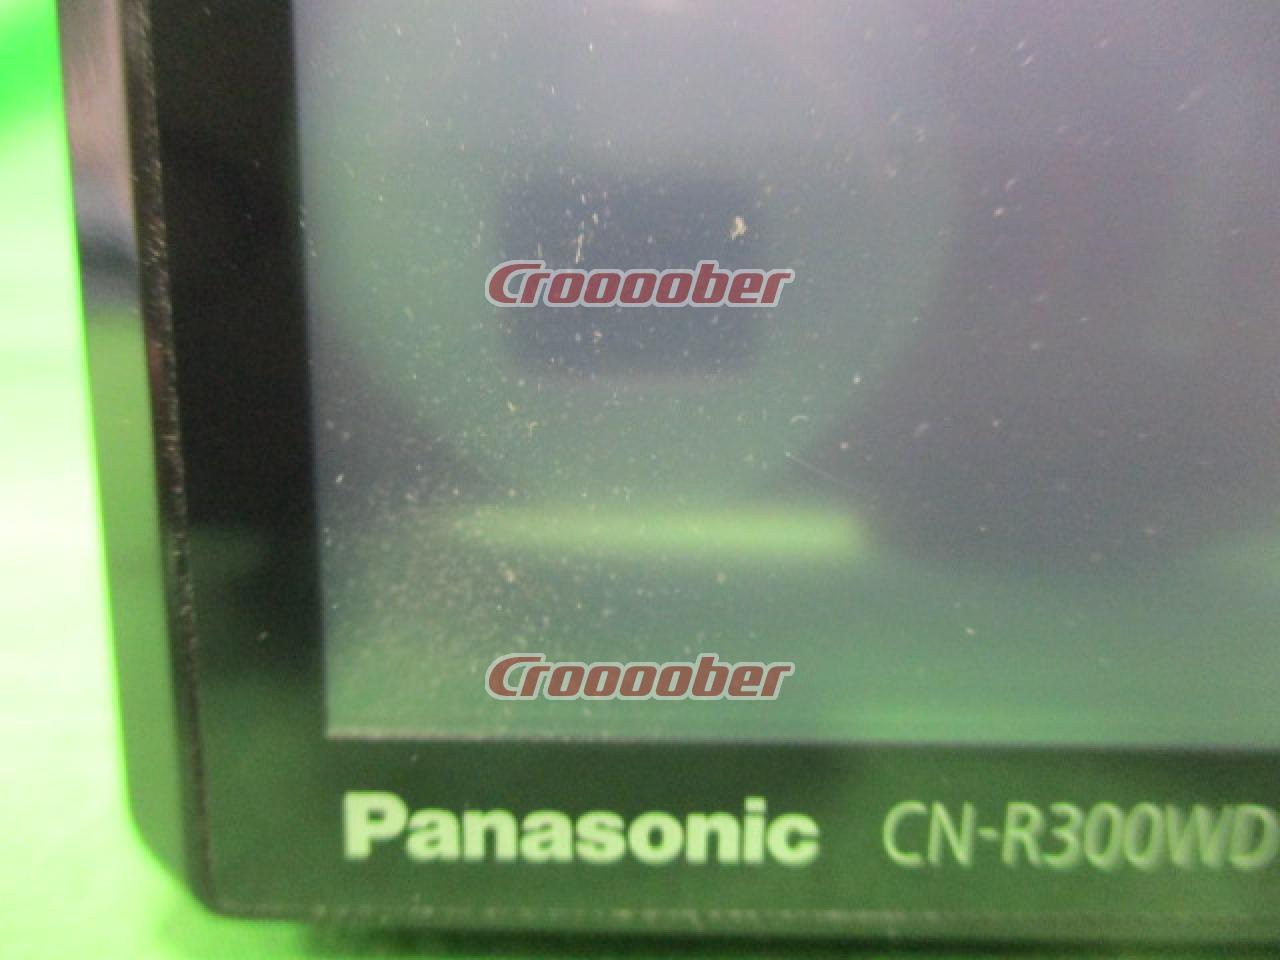 Panasonic Strada CN-R300WD 200mm Wide Panel AV Integrated Memory 